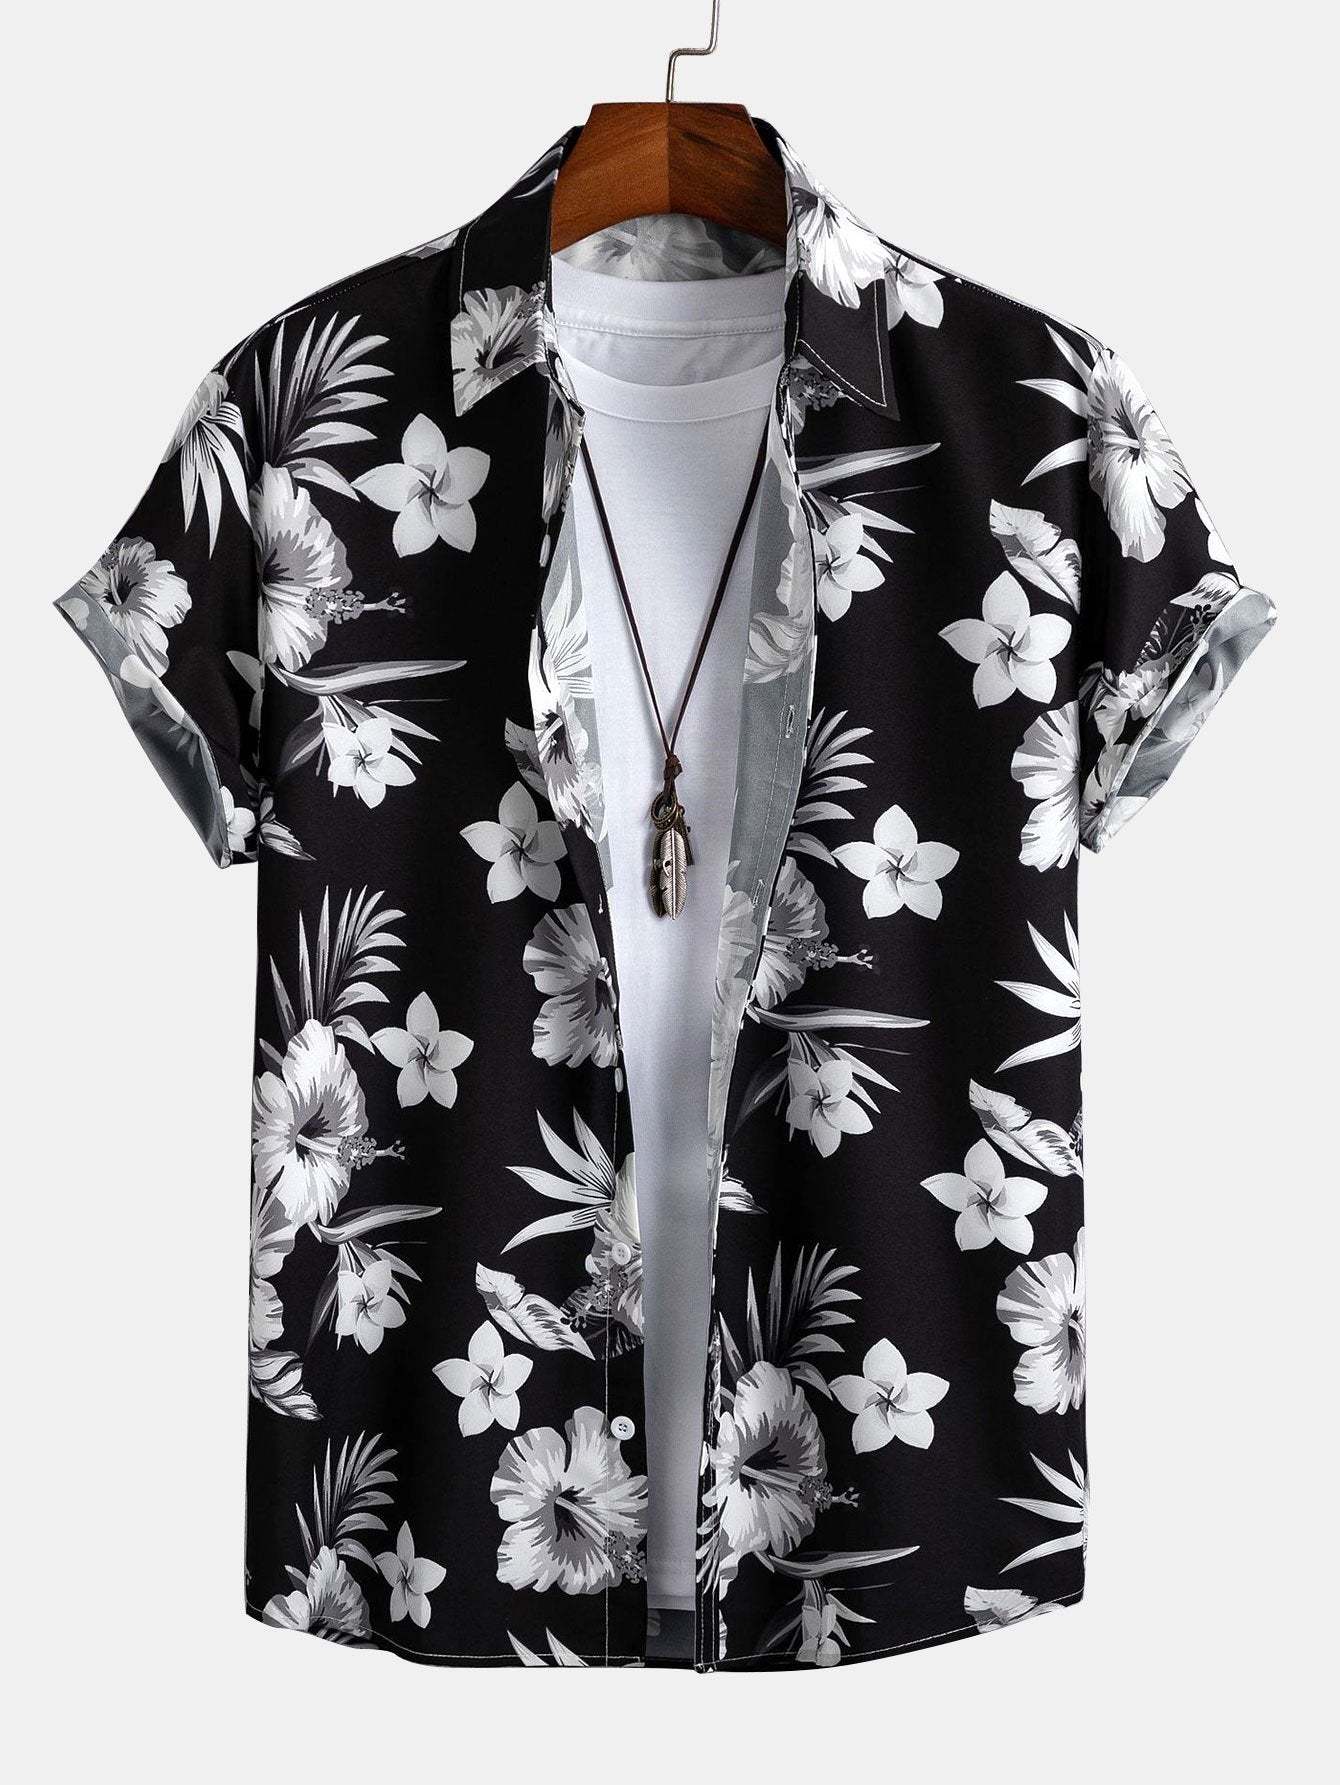 Tropical Floral Print Button Up Shirt & Swim Shorts